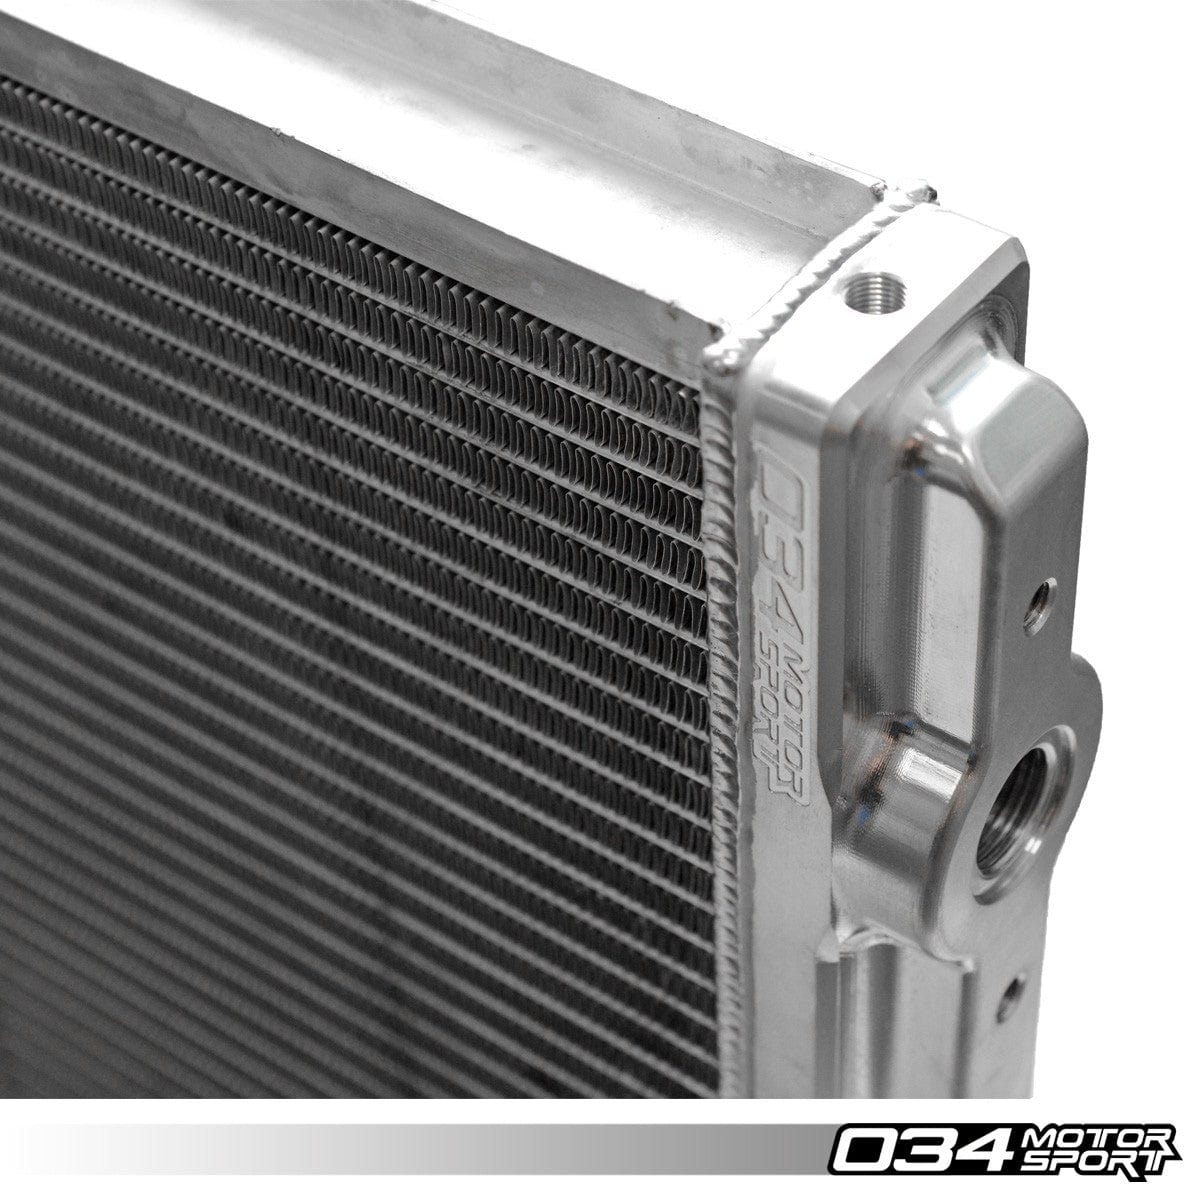 034Motorsport Audi Supercharger Heat Exchanger Upgrade Kit (B8/B8.5 S4) - ML Performance